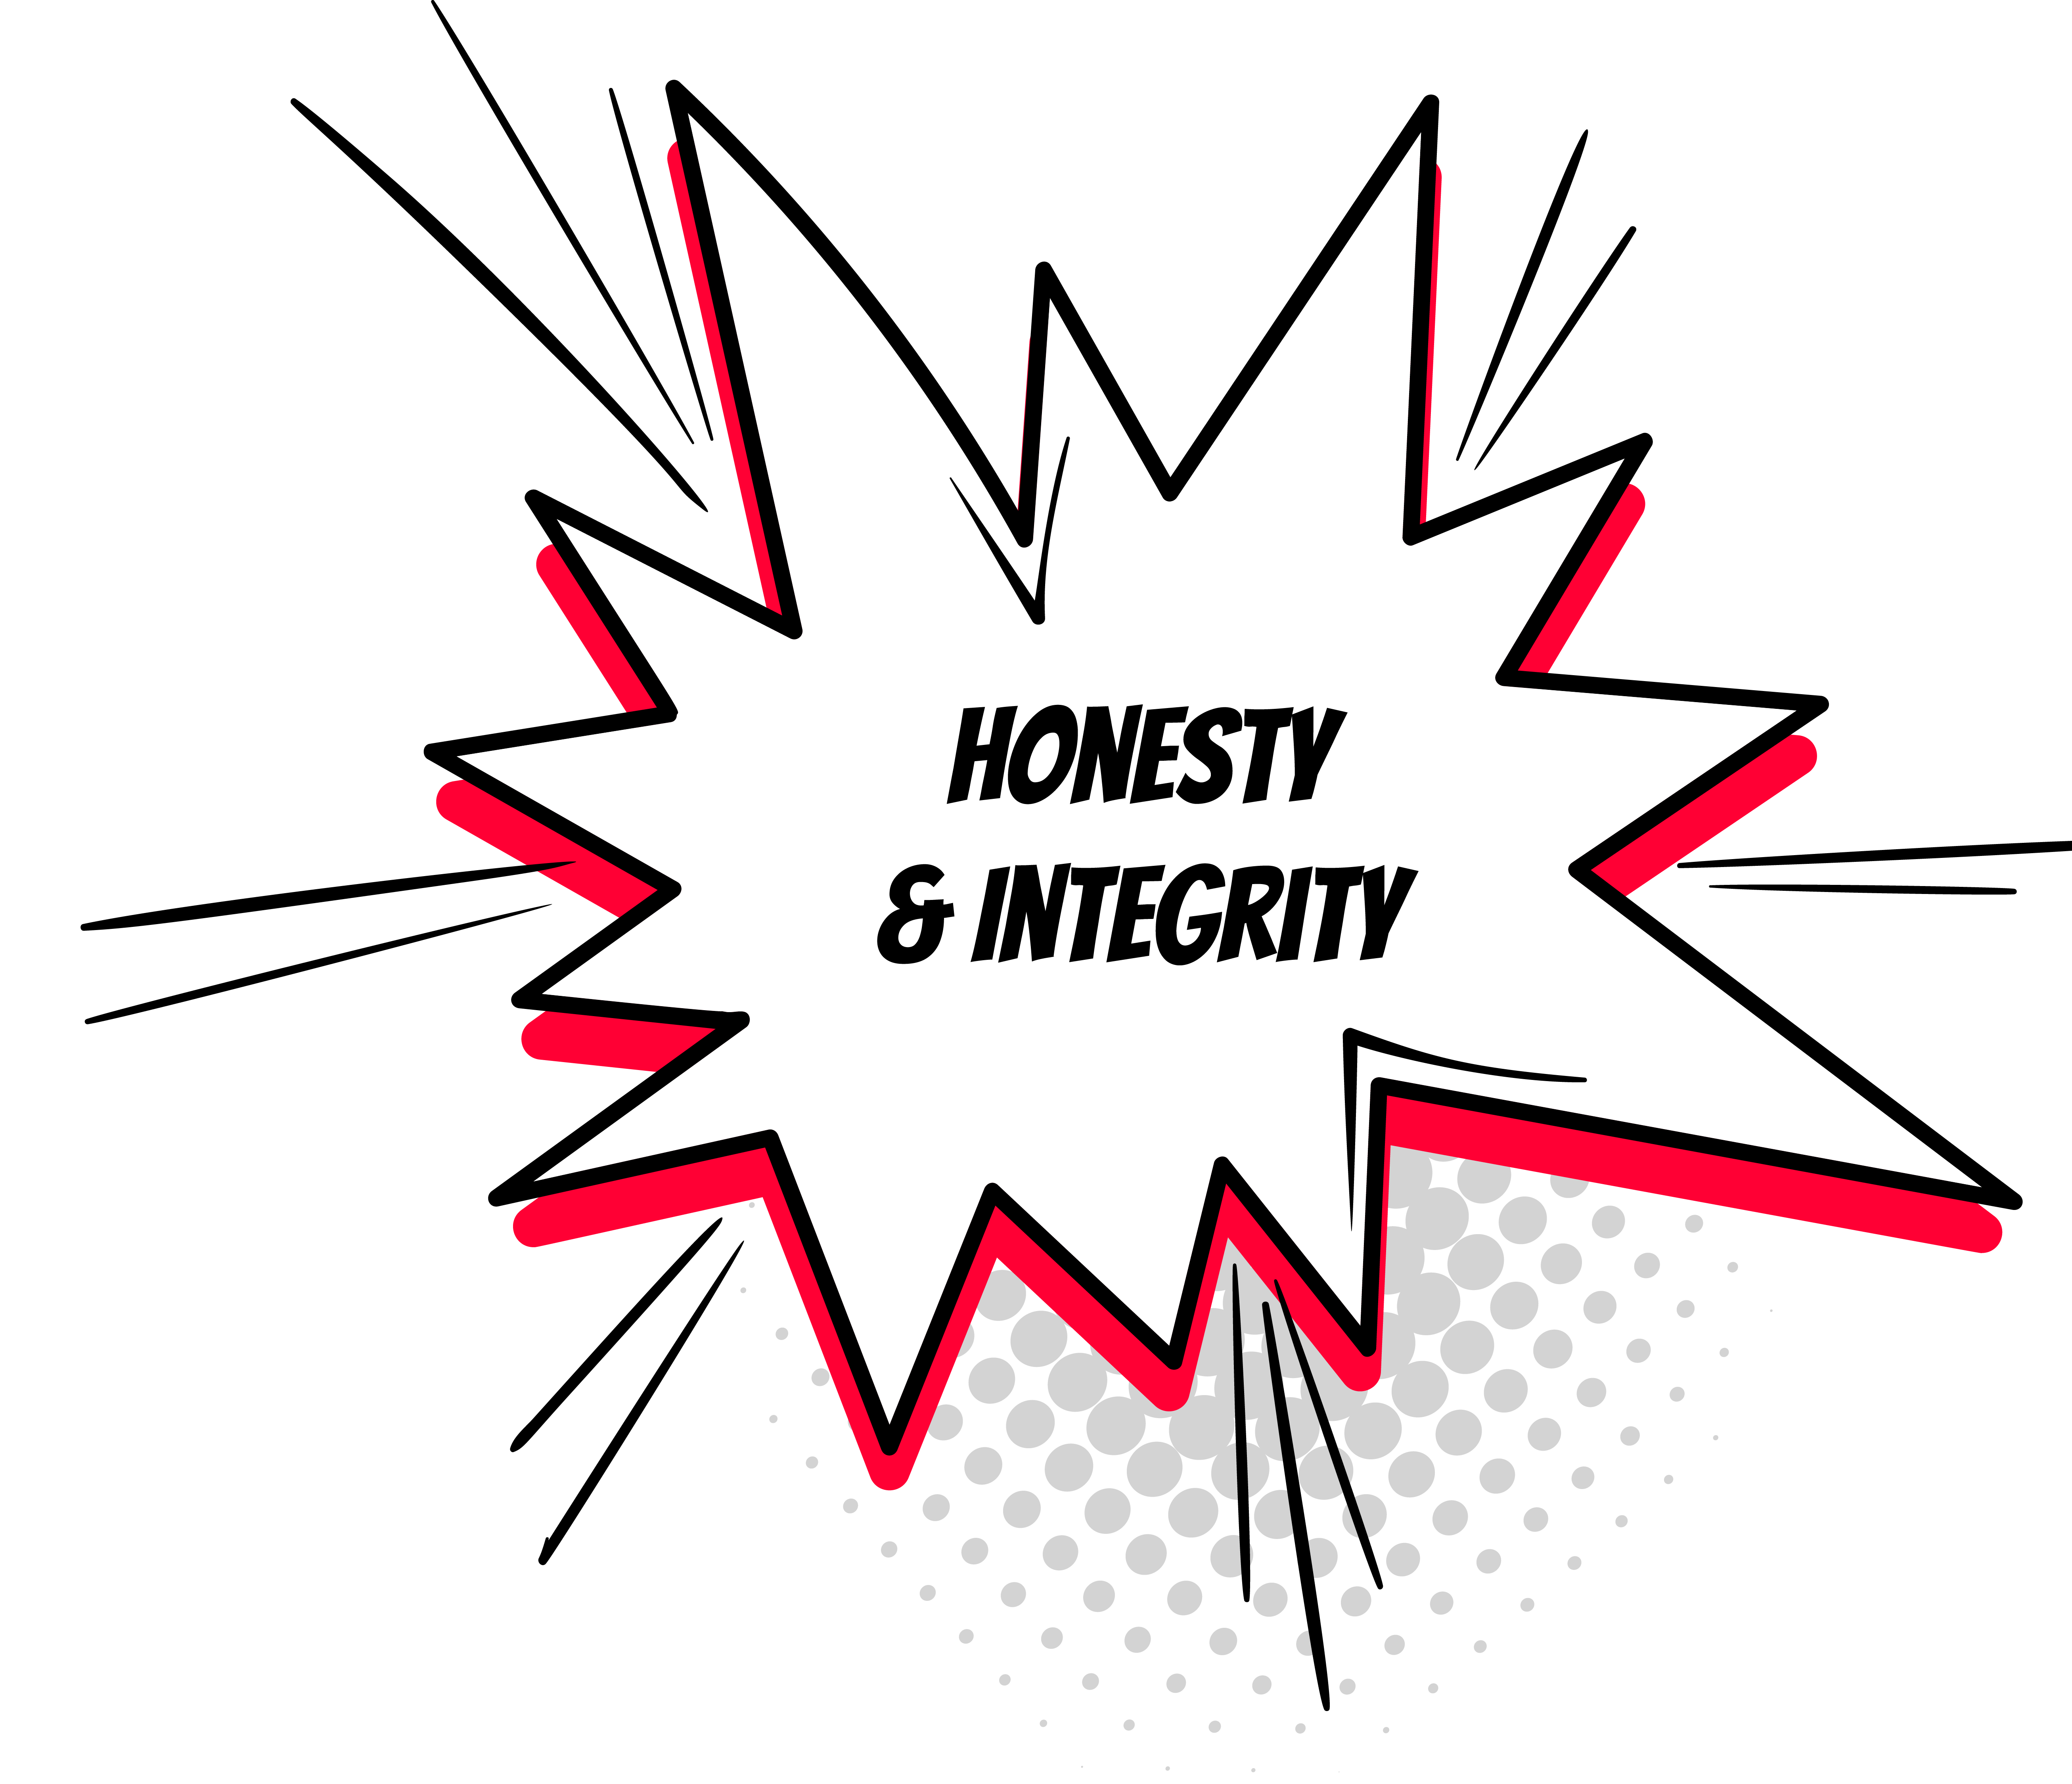 honesty & integrity